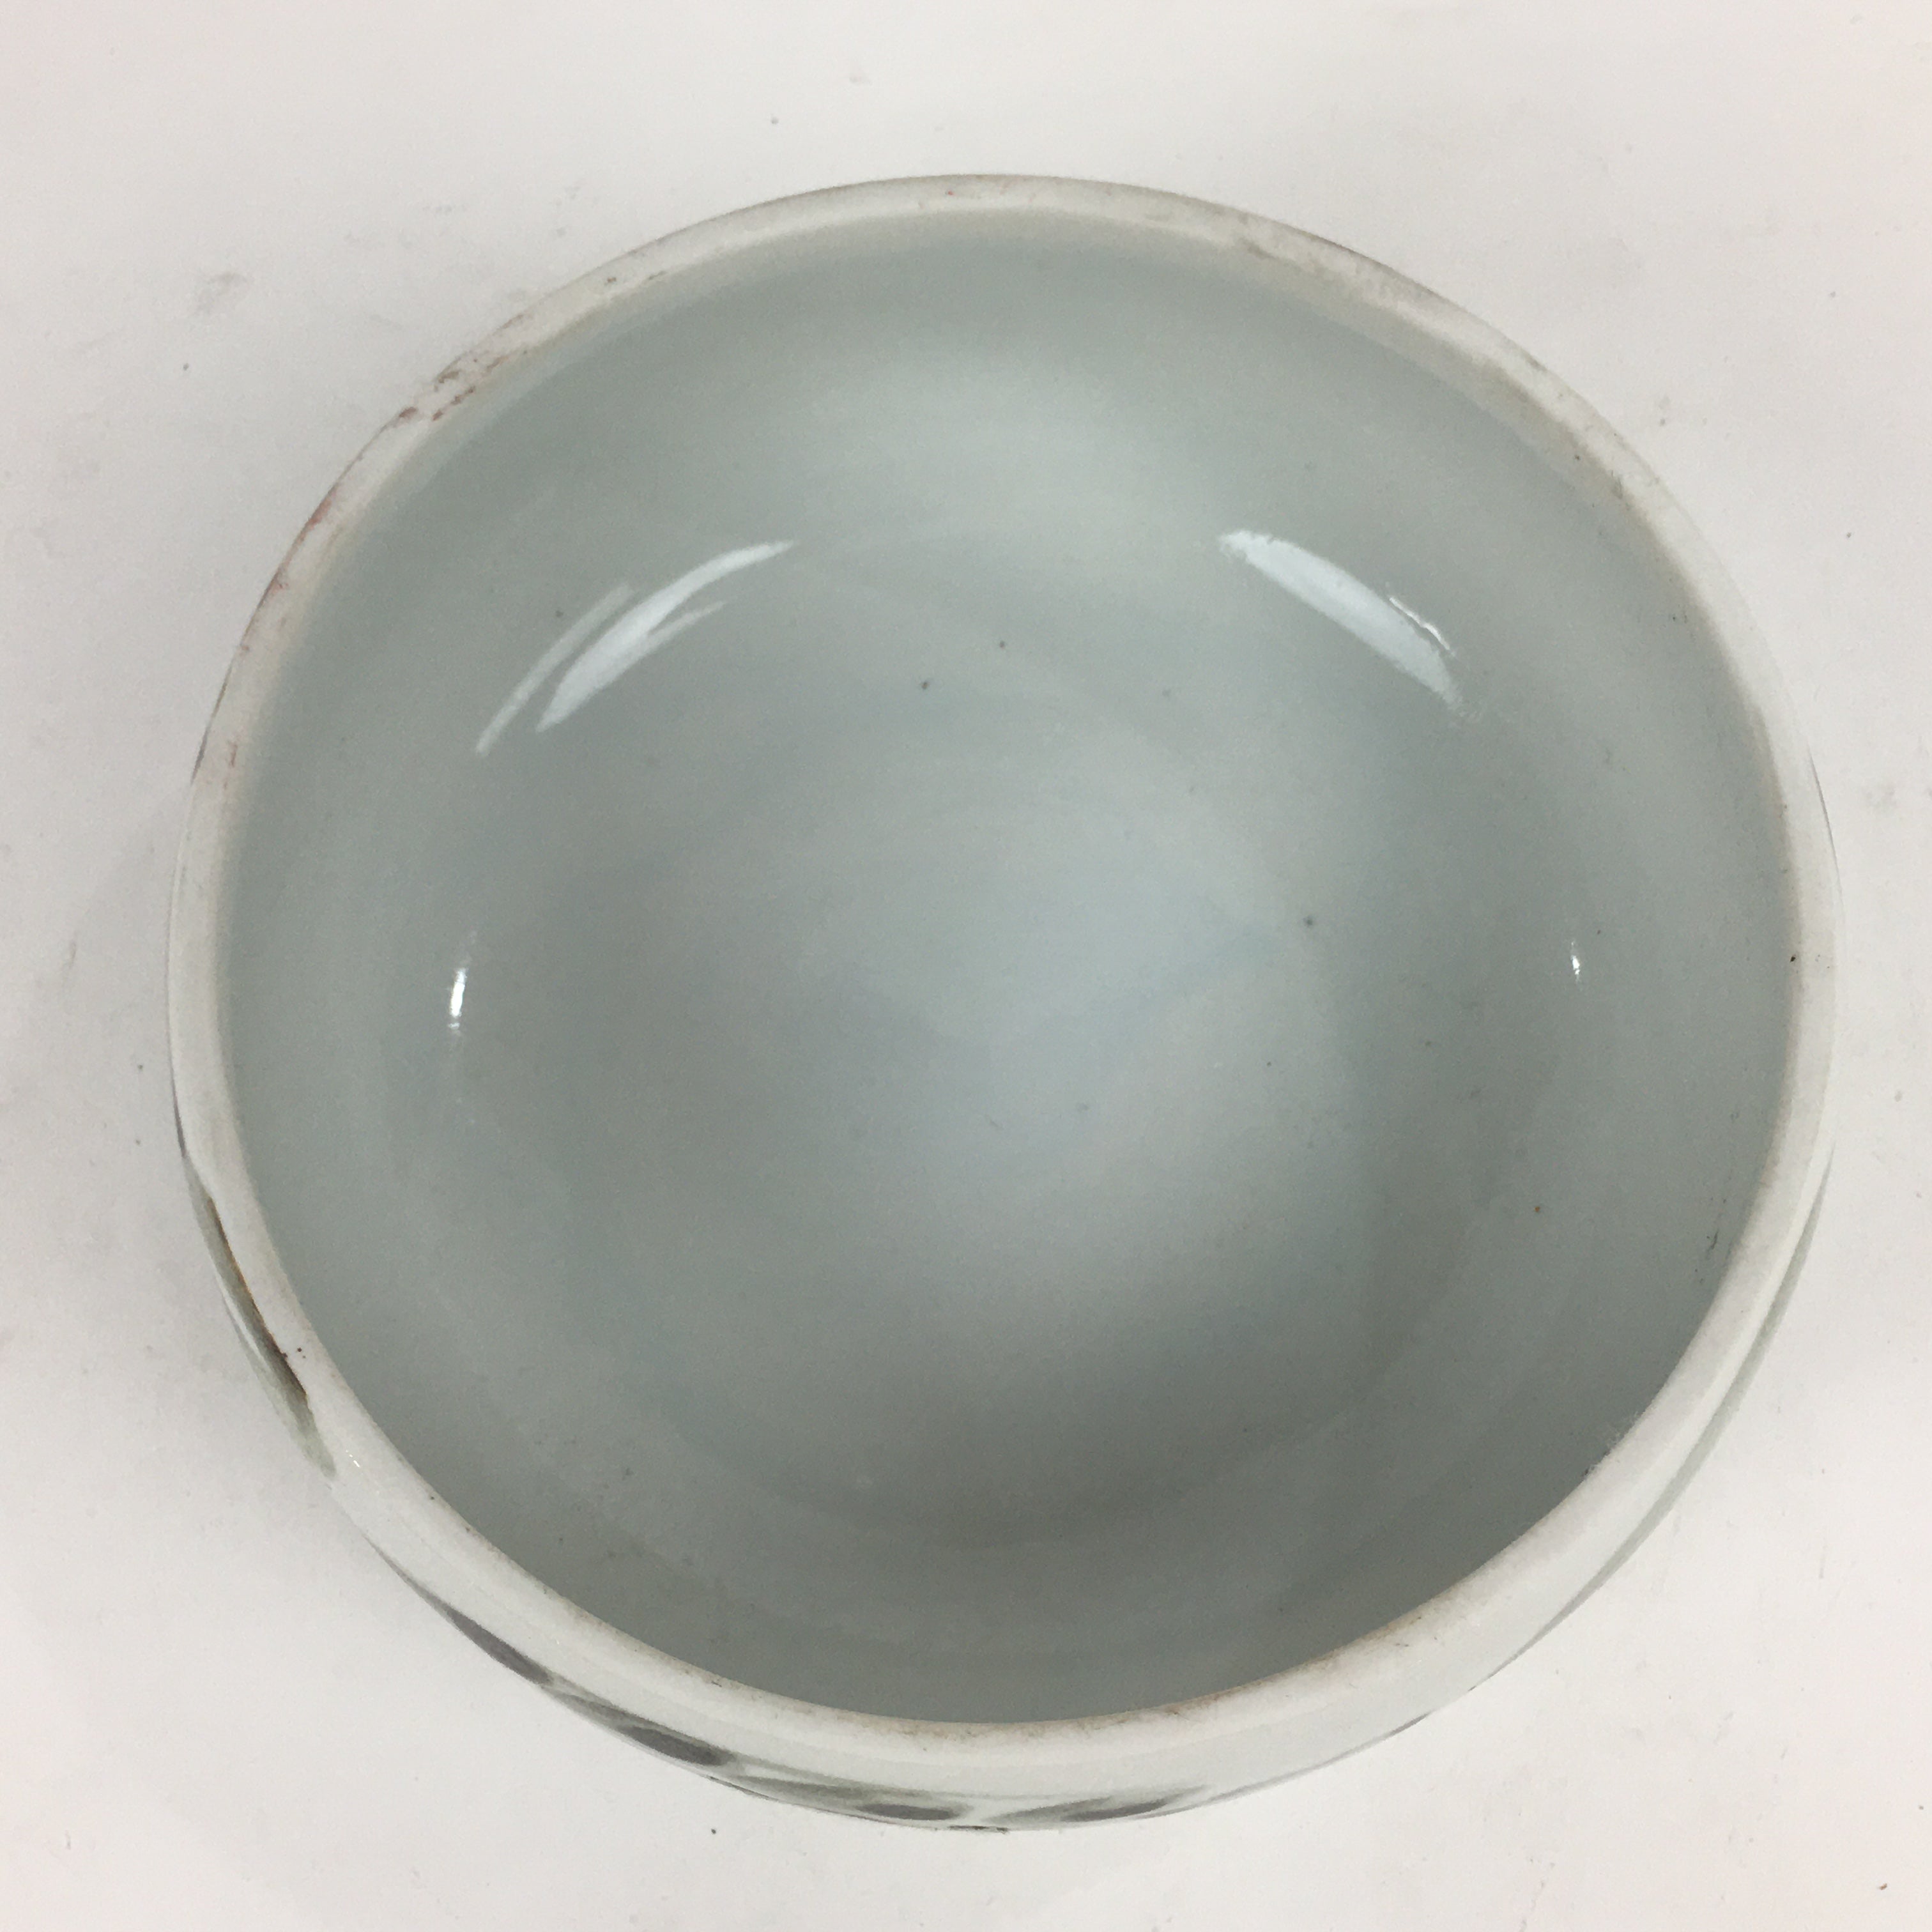 Japanese Porcelain Snack Bowl Kashiki Pottery Round Black Brush Design PP772